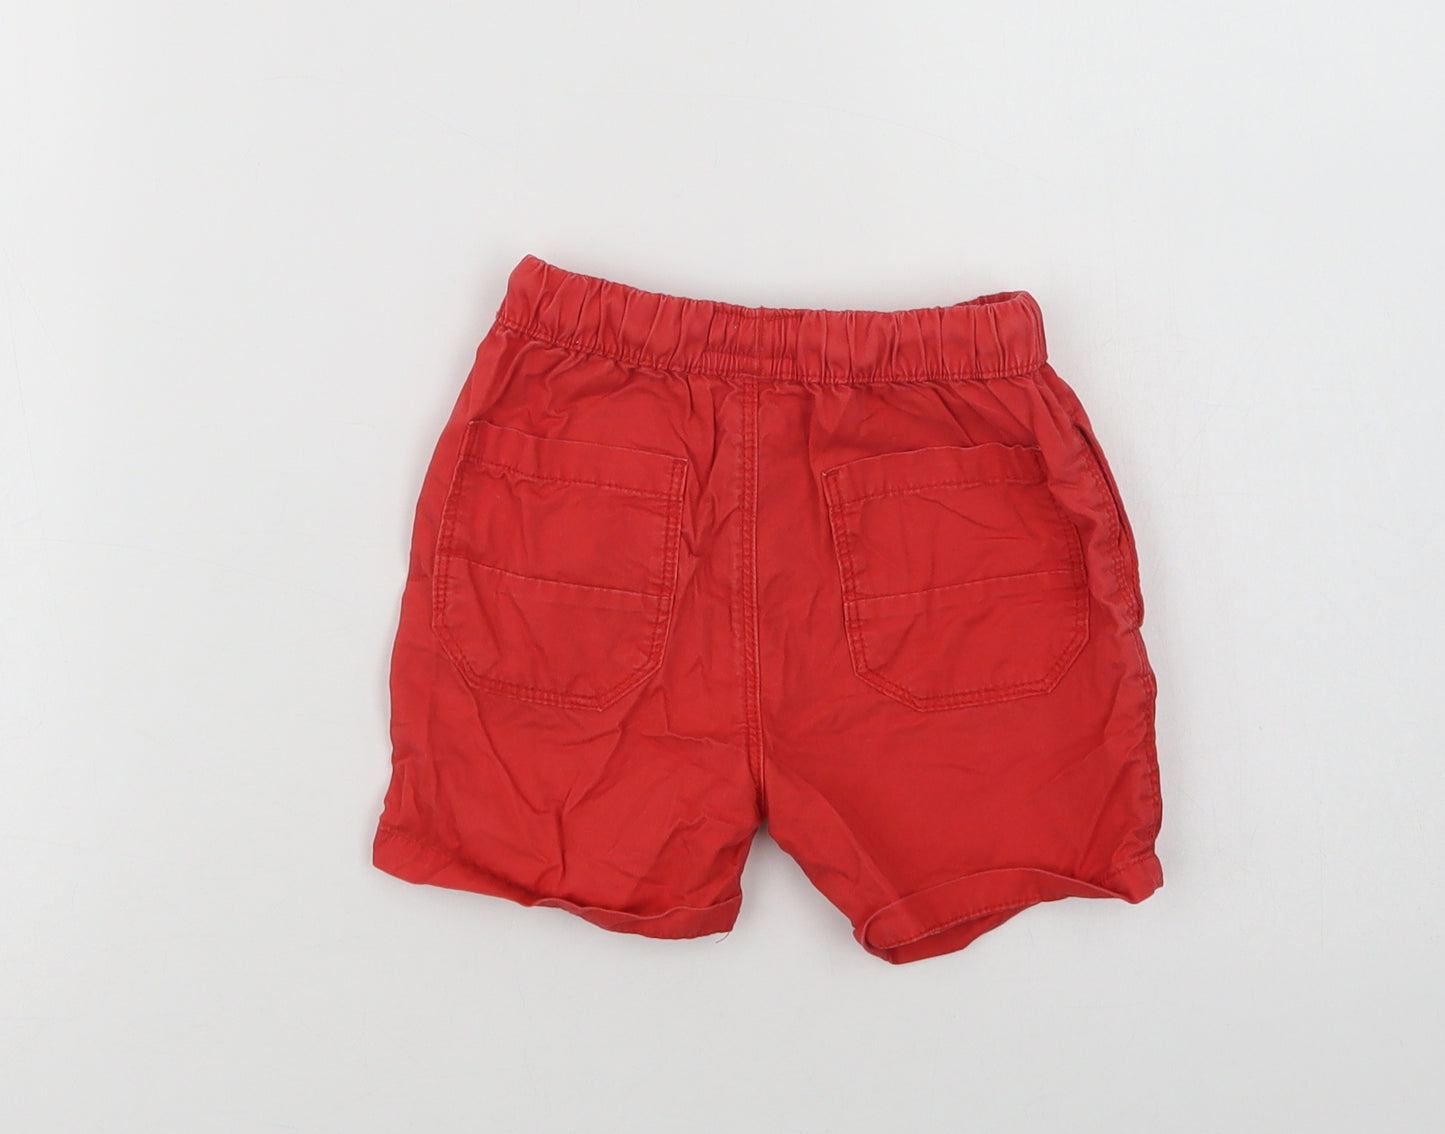 NEXT Boys Red  Cotton Chino Shorts Size 2-3 Years  Regular Drawstring